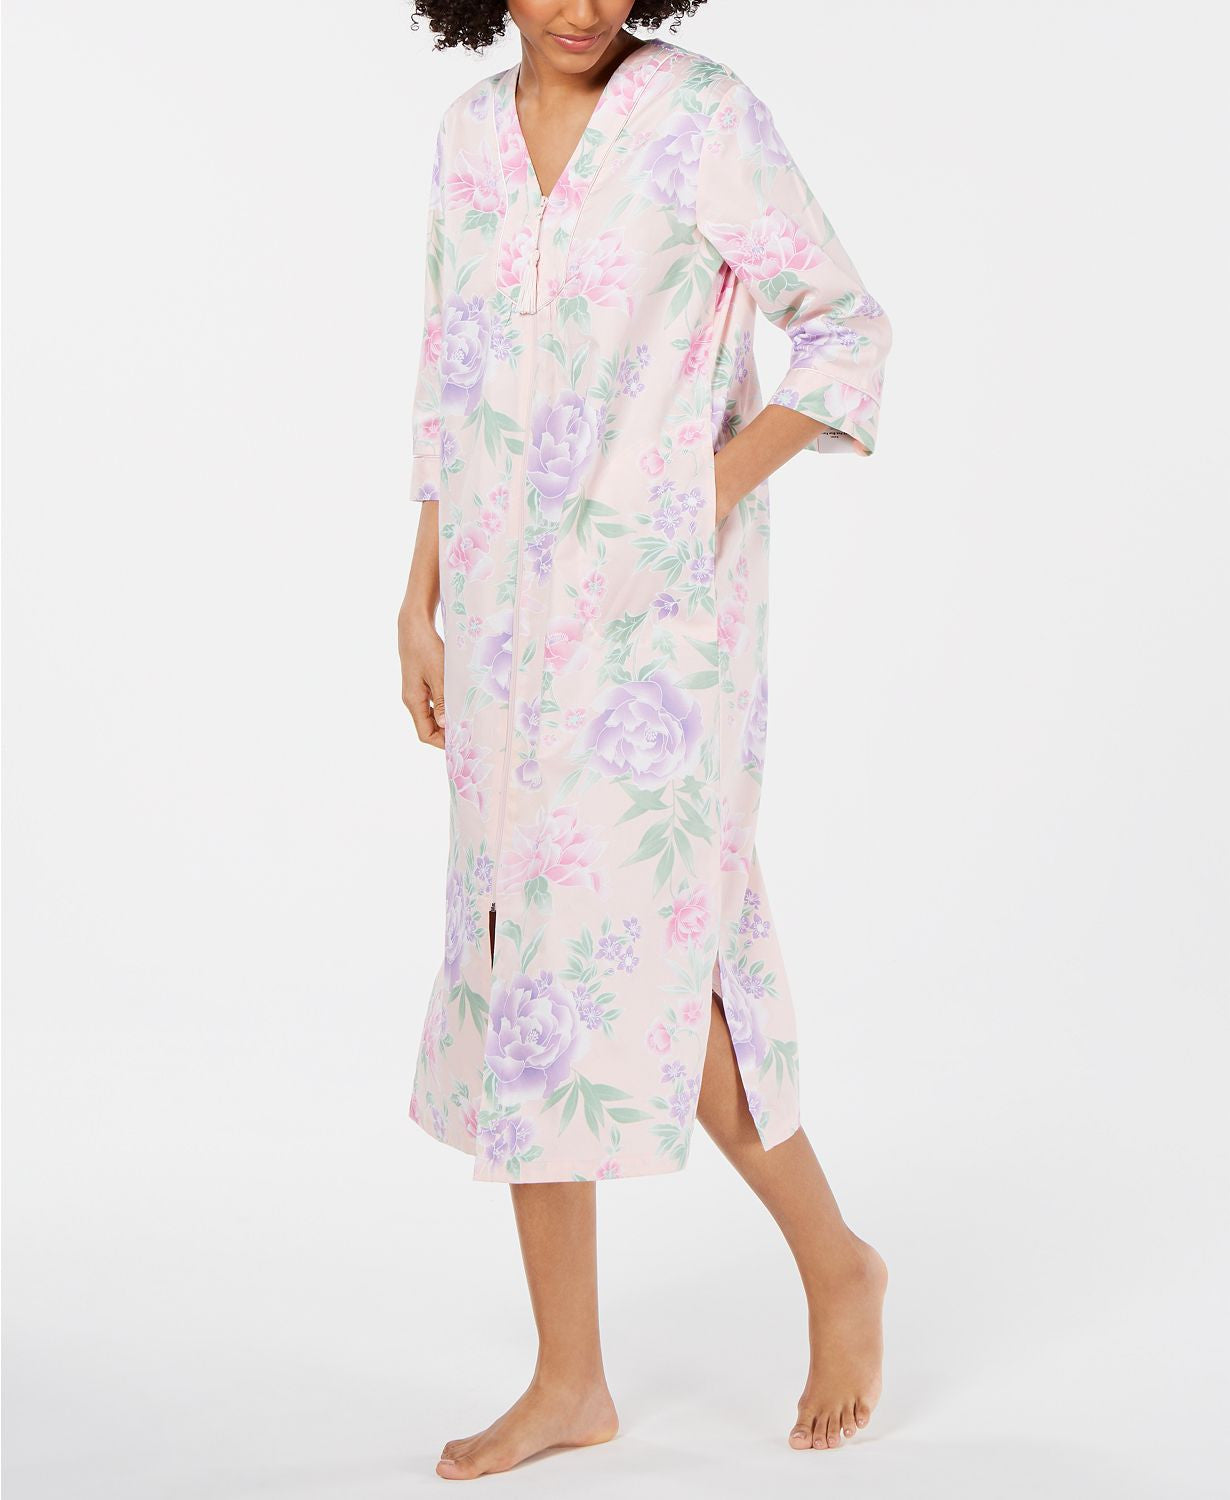 Miss Elaine Printed Cotton Sateen Long Zip Robe in Pink/Violet Floral